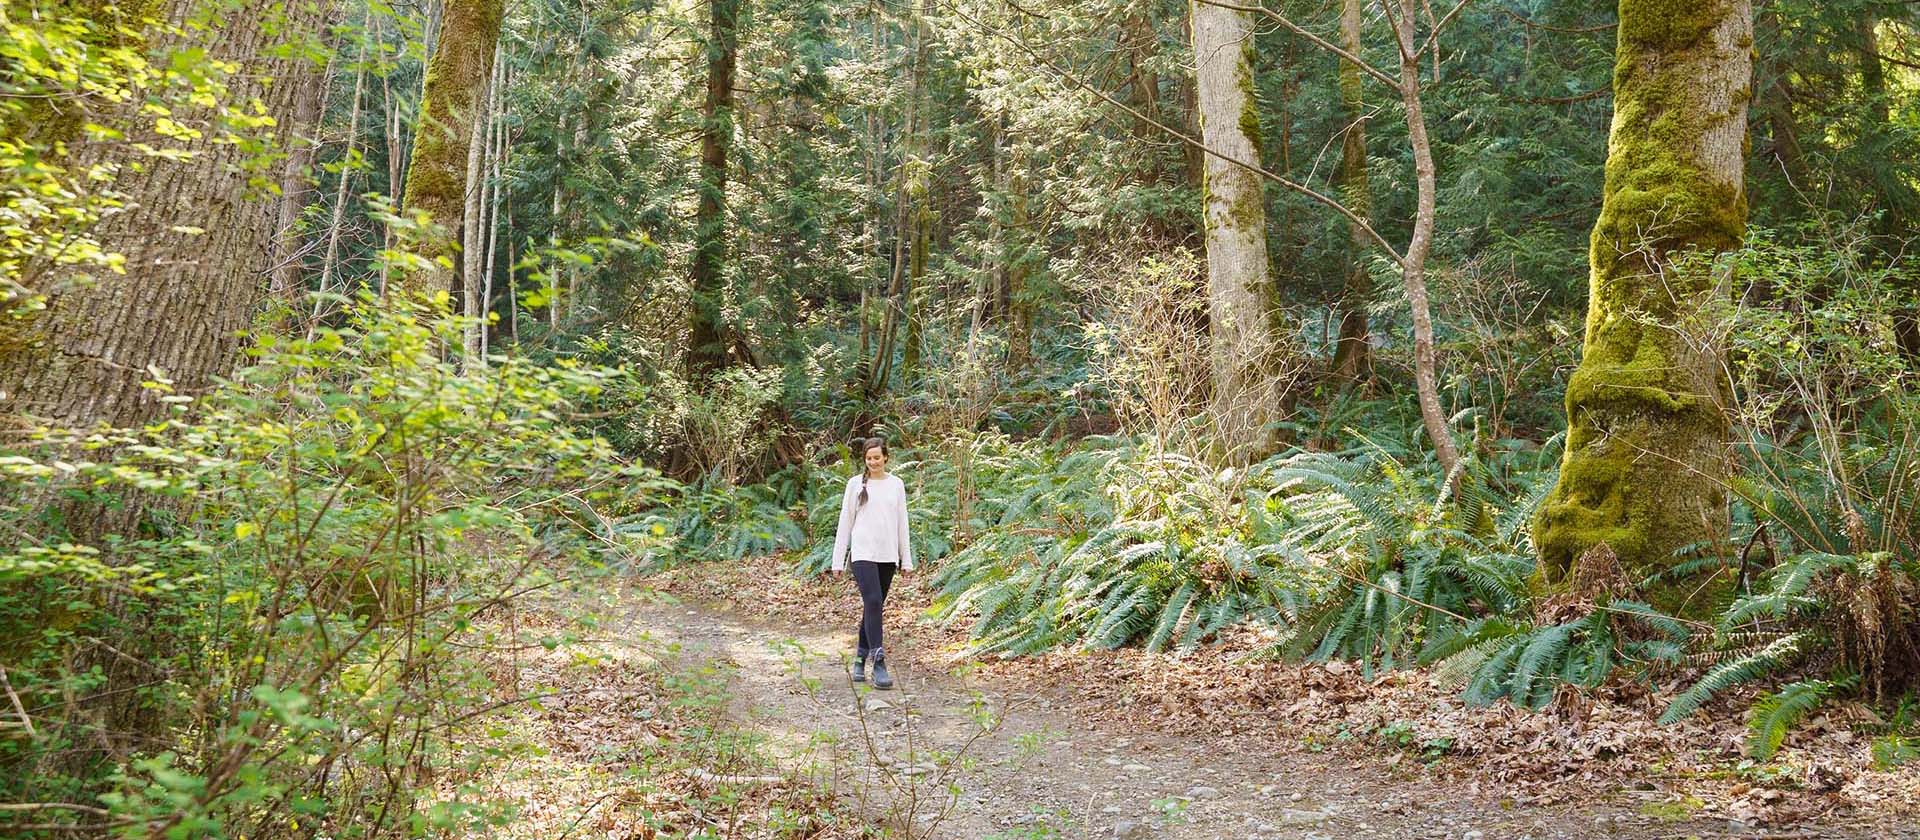 Woman walking along forest path